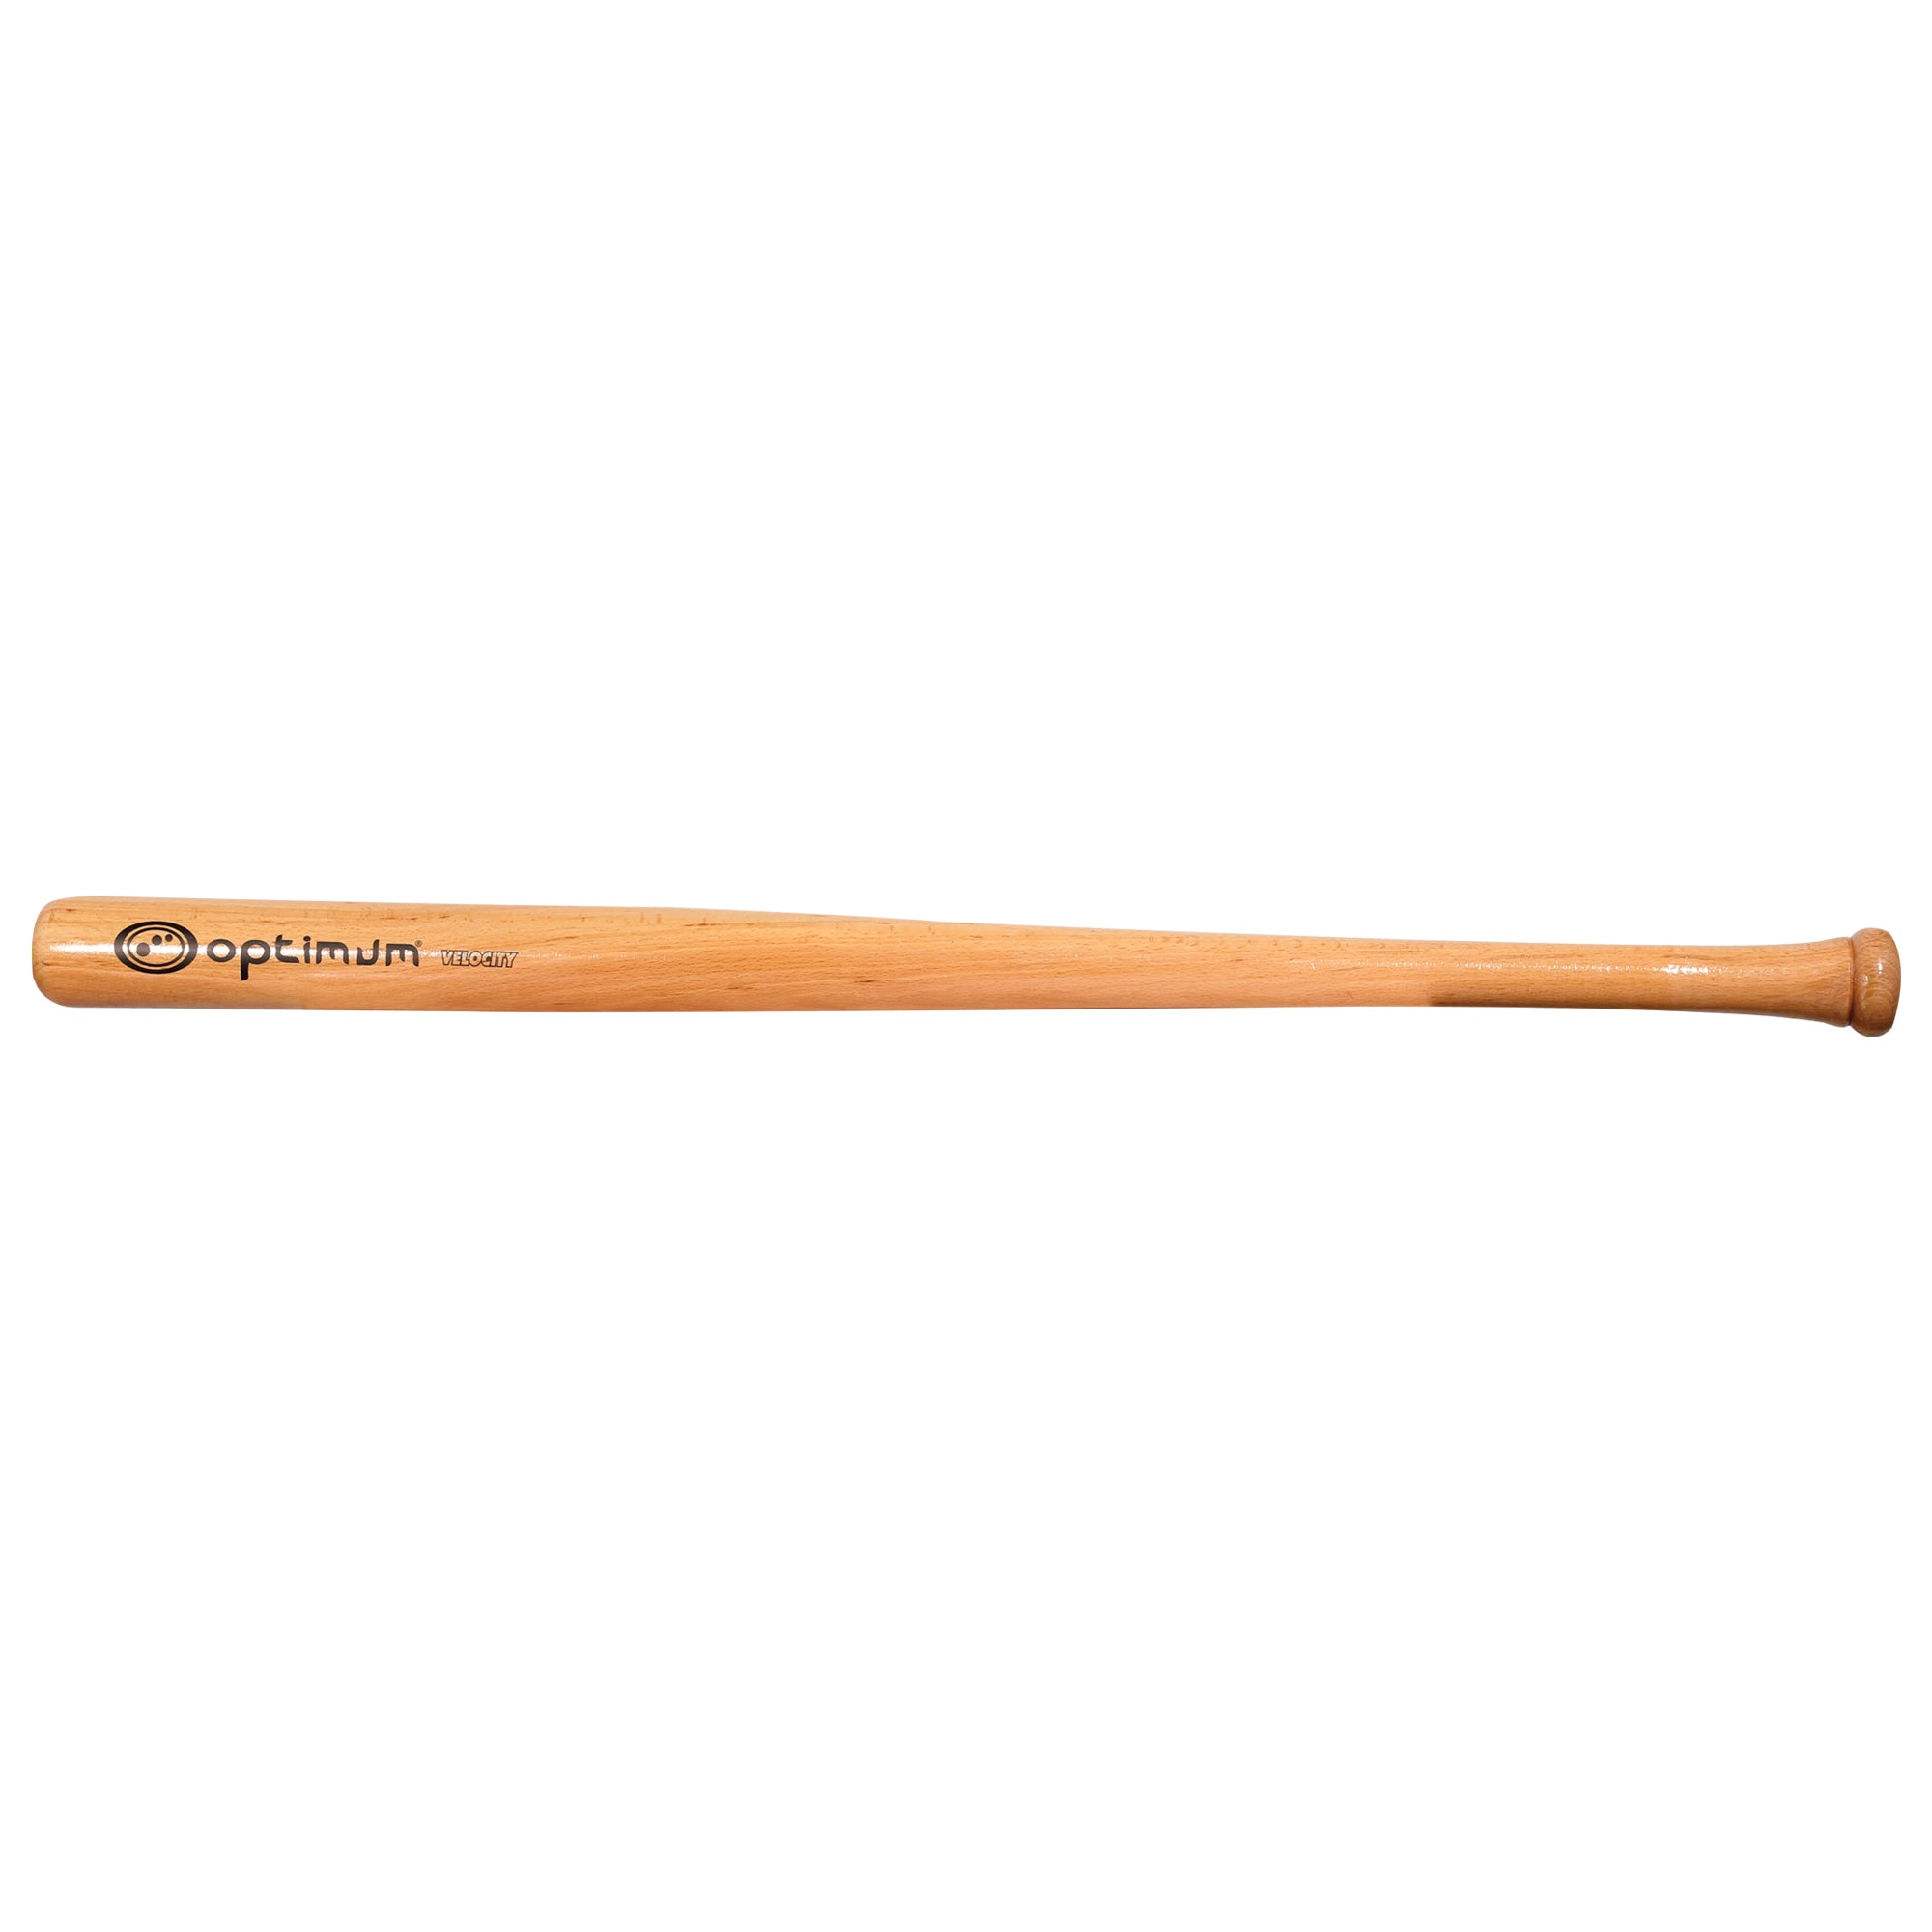 Velocity 32" Wooden Baseball Bat - Optimum